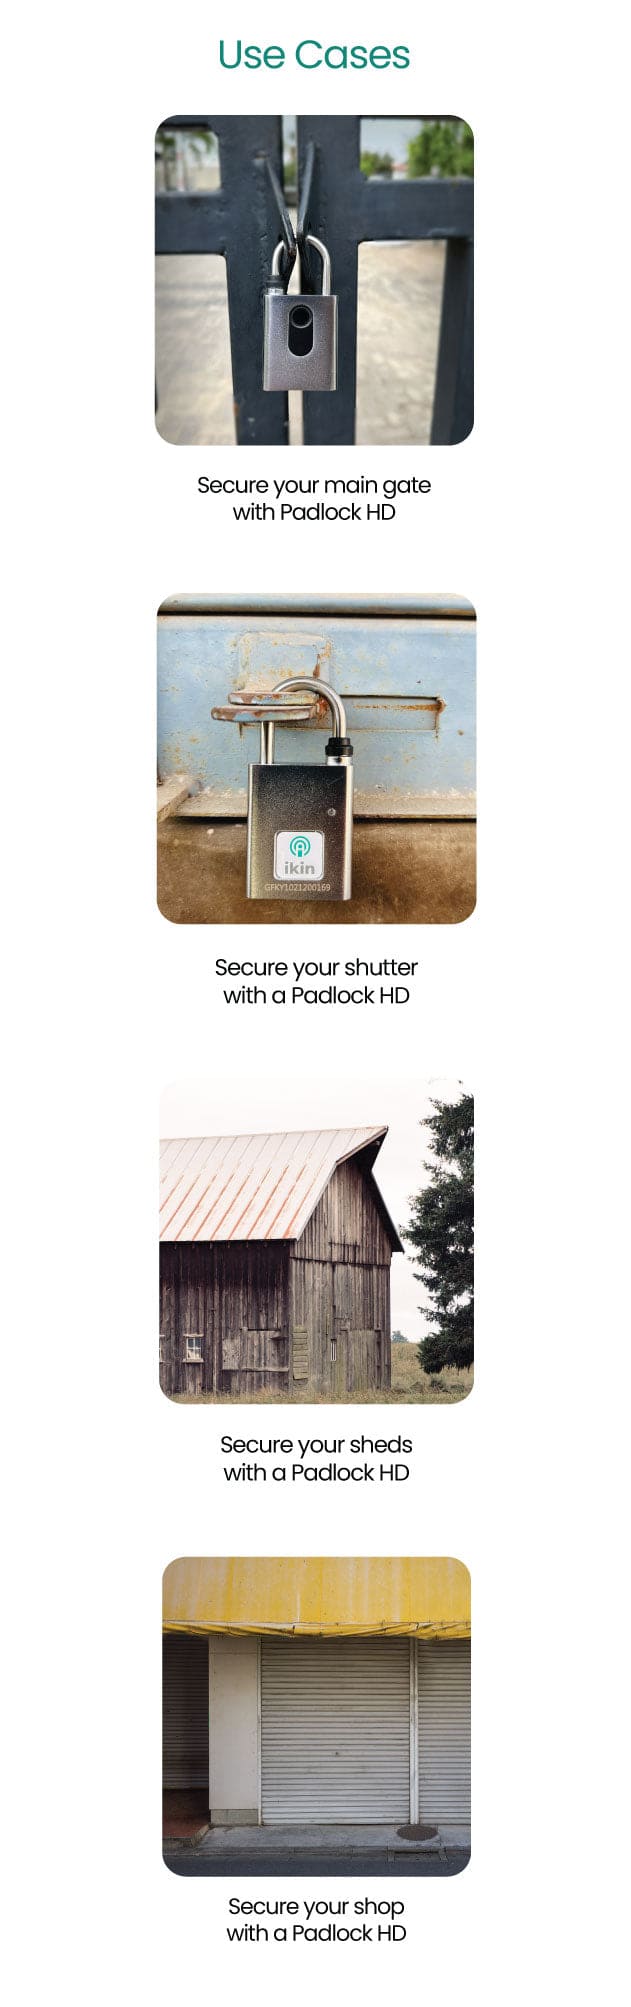 IKIN Padlock HD - Description - Use cases - mobile image